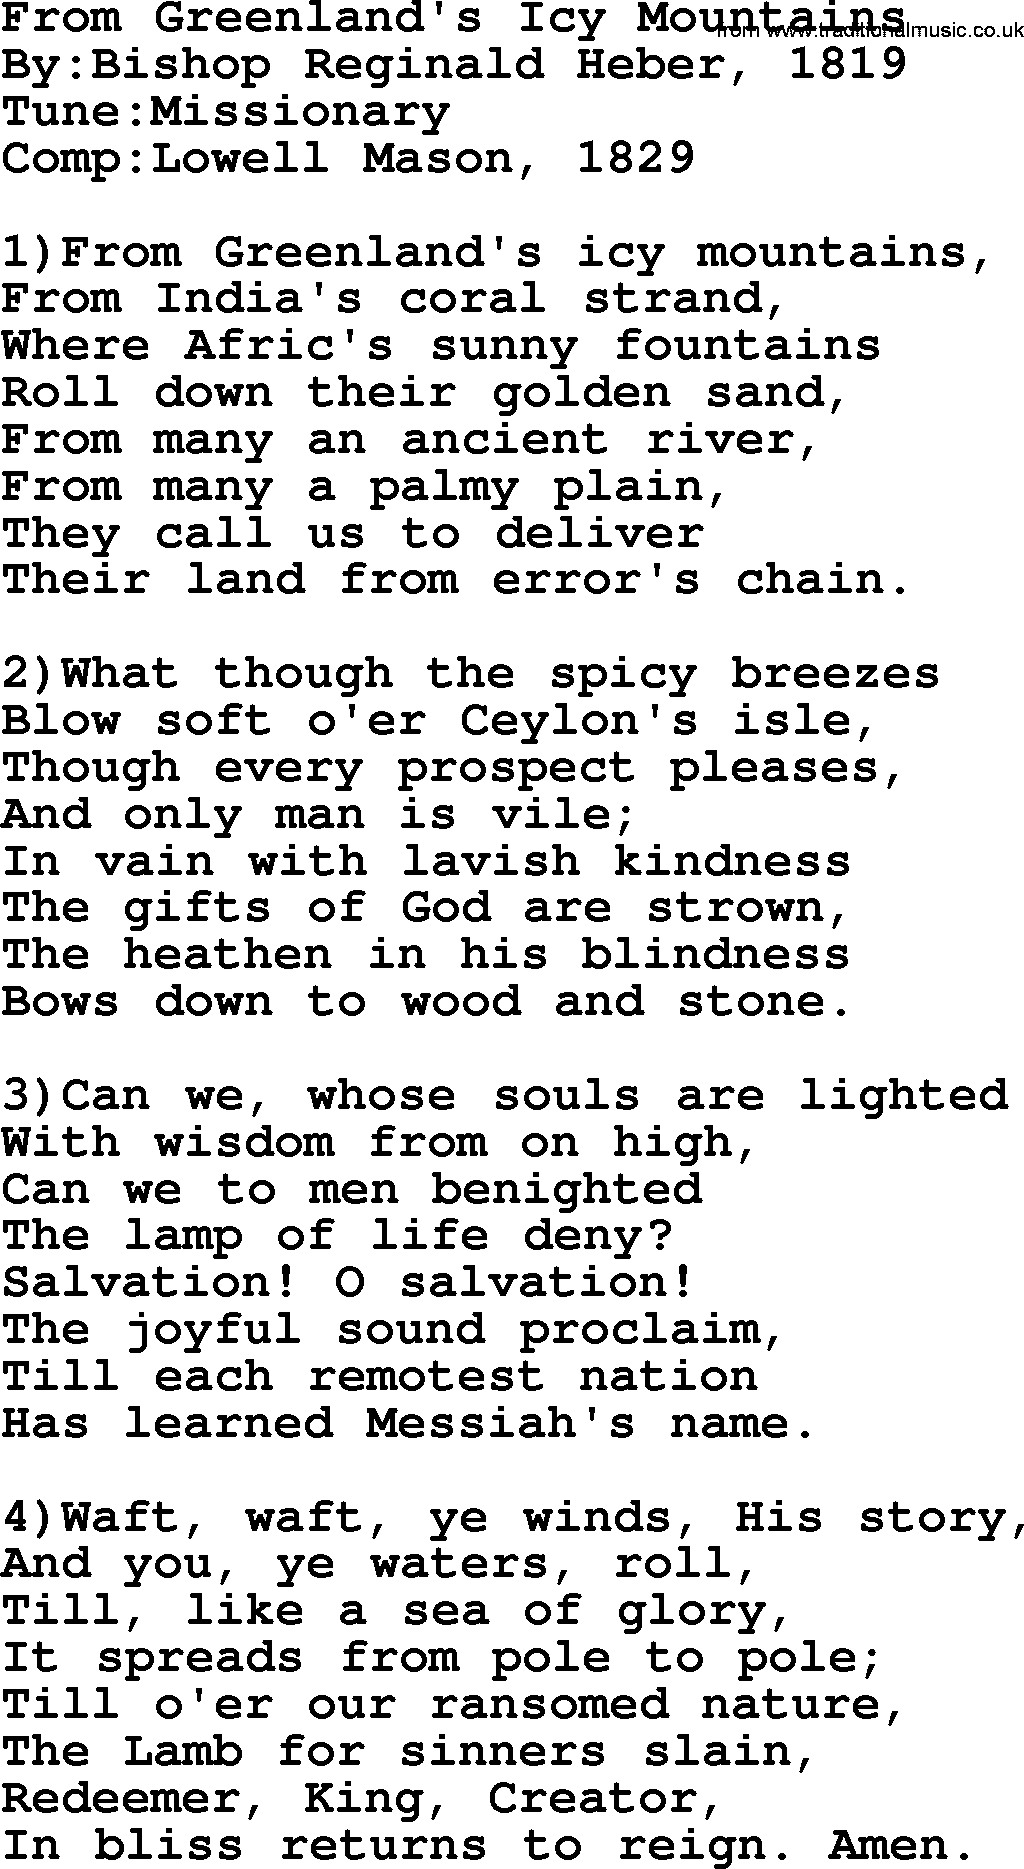 Methodist Hymn: From Greenland's Icy Mountains, lyrics